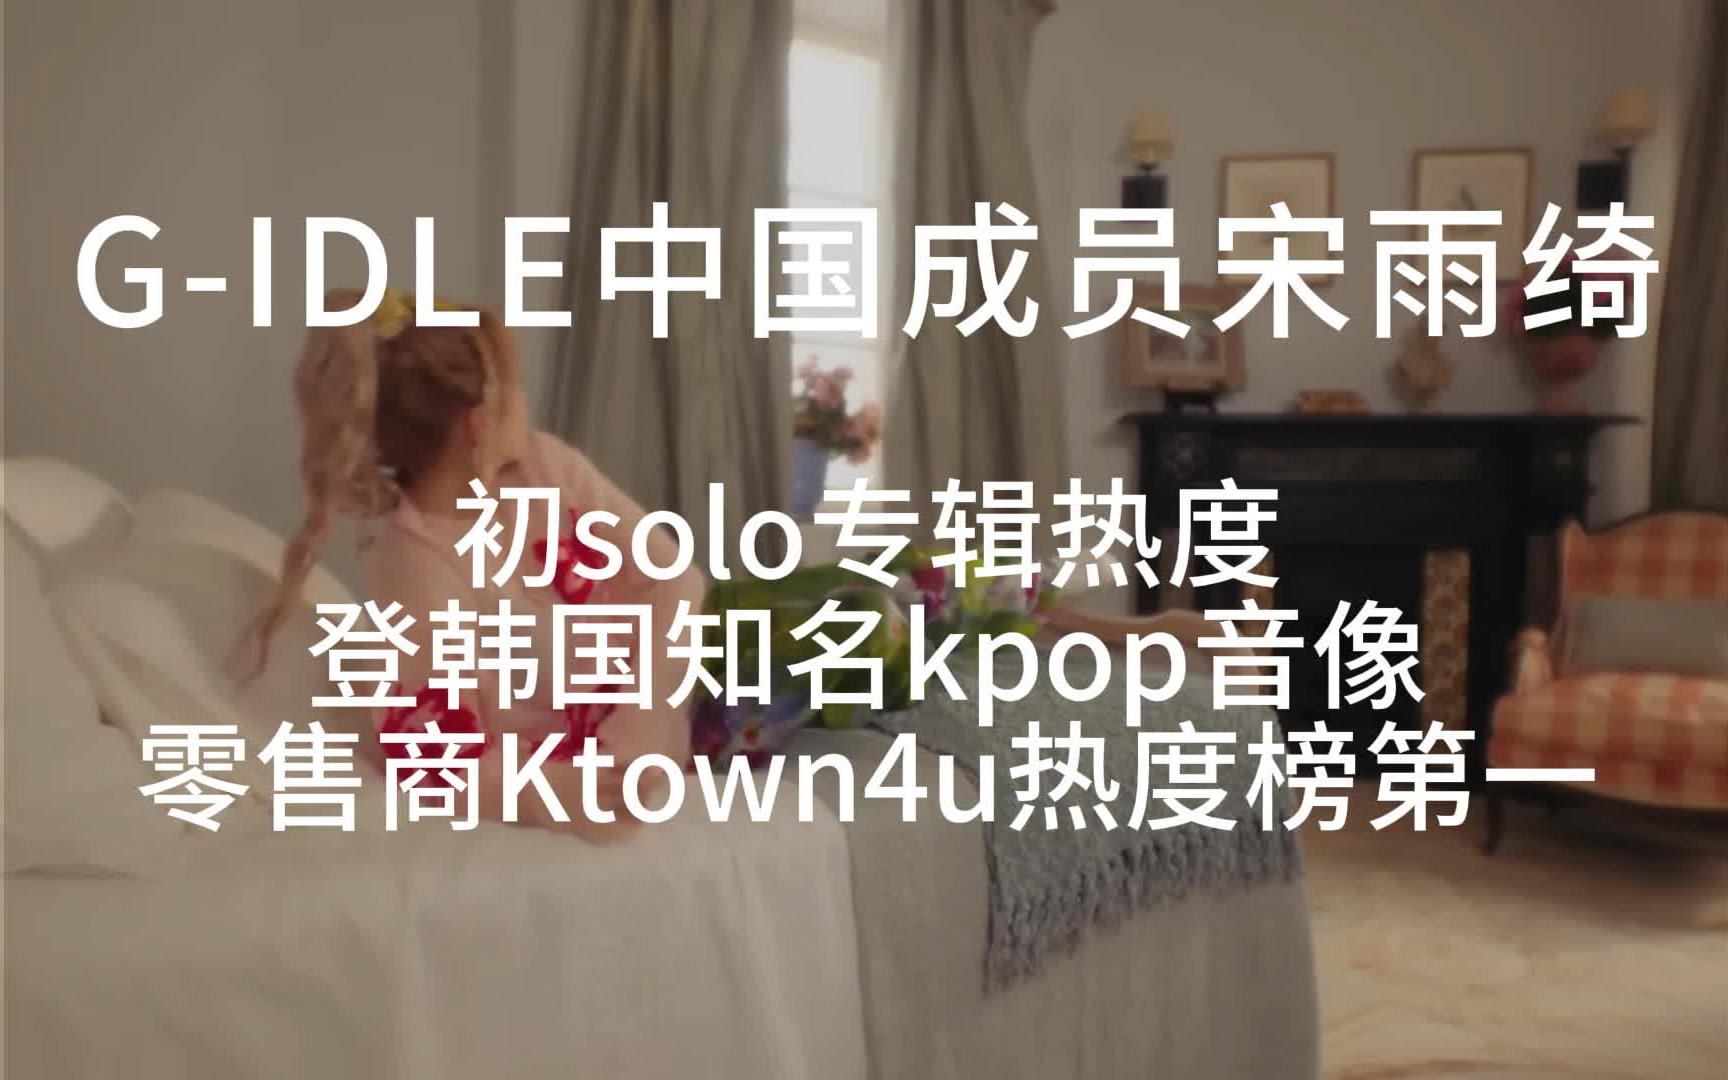 G-idle宋雨琦初SOLO，首张专辑登韩国音像商热度第一